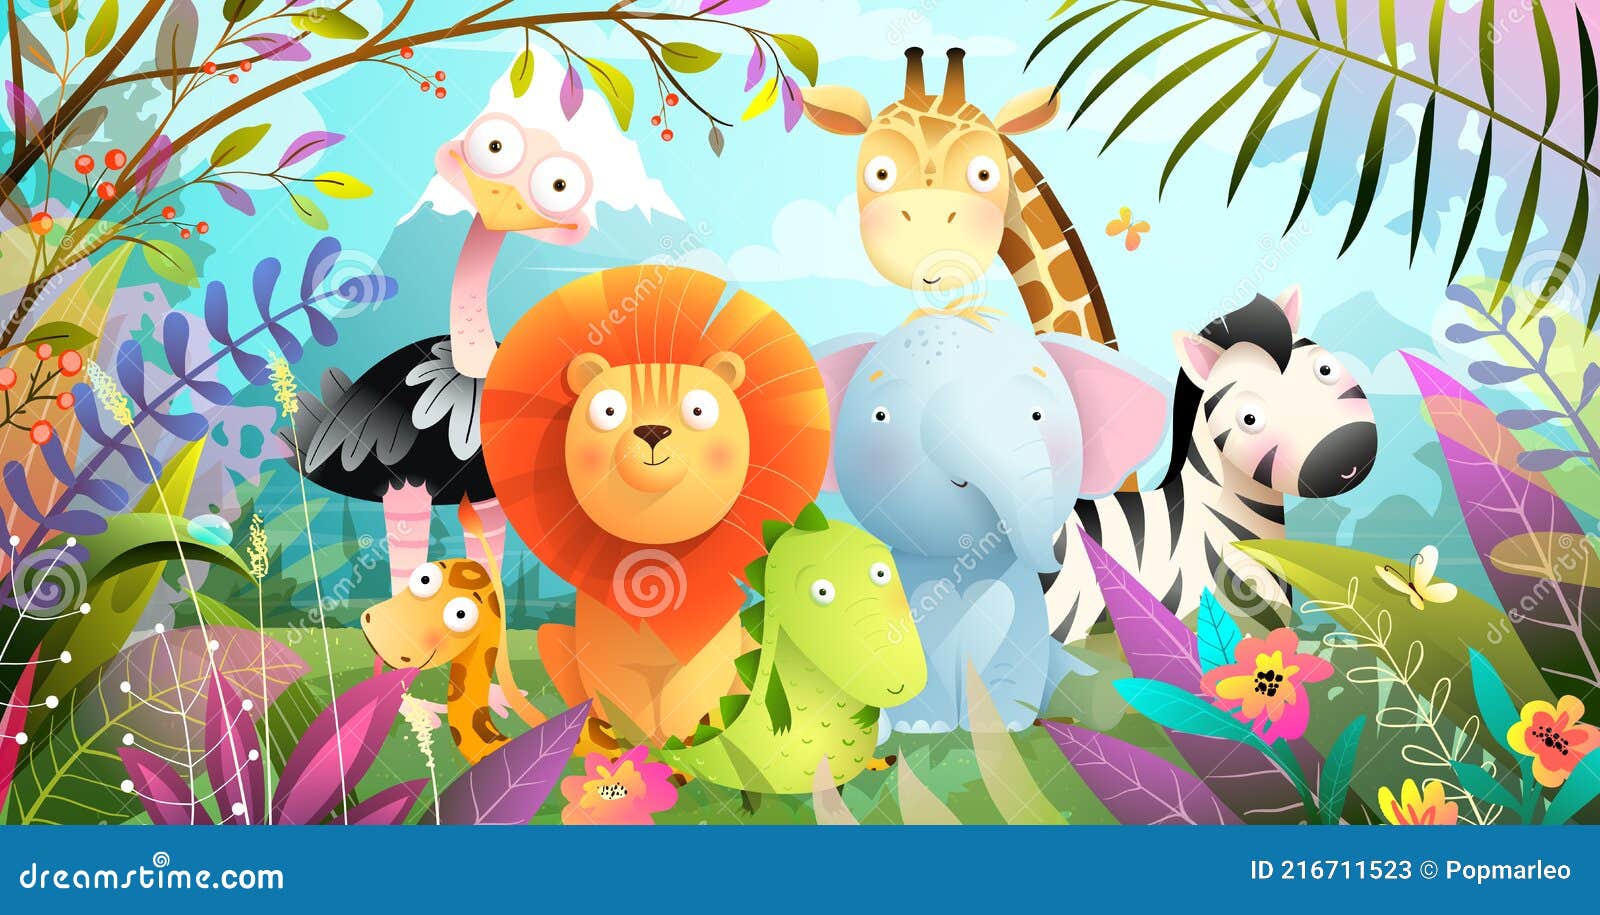 Top 100+ Imágenes de animales de la selva infantiles 